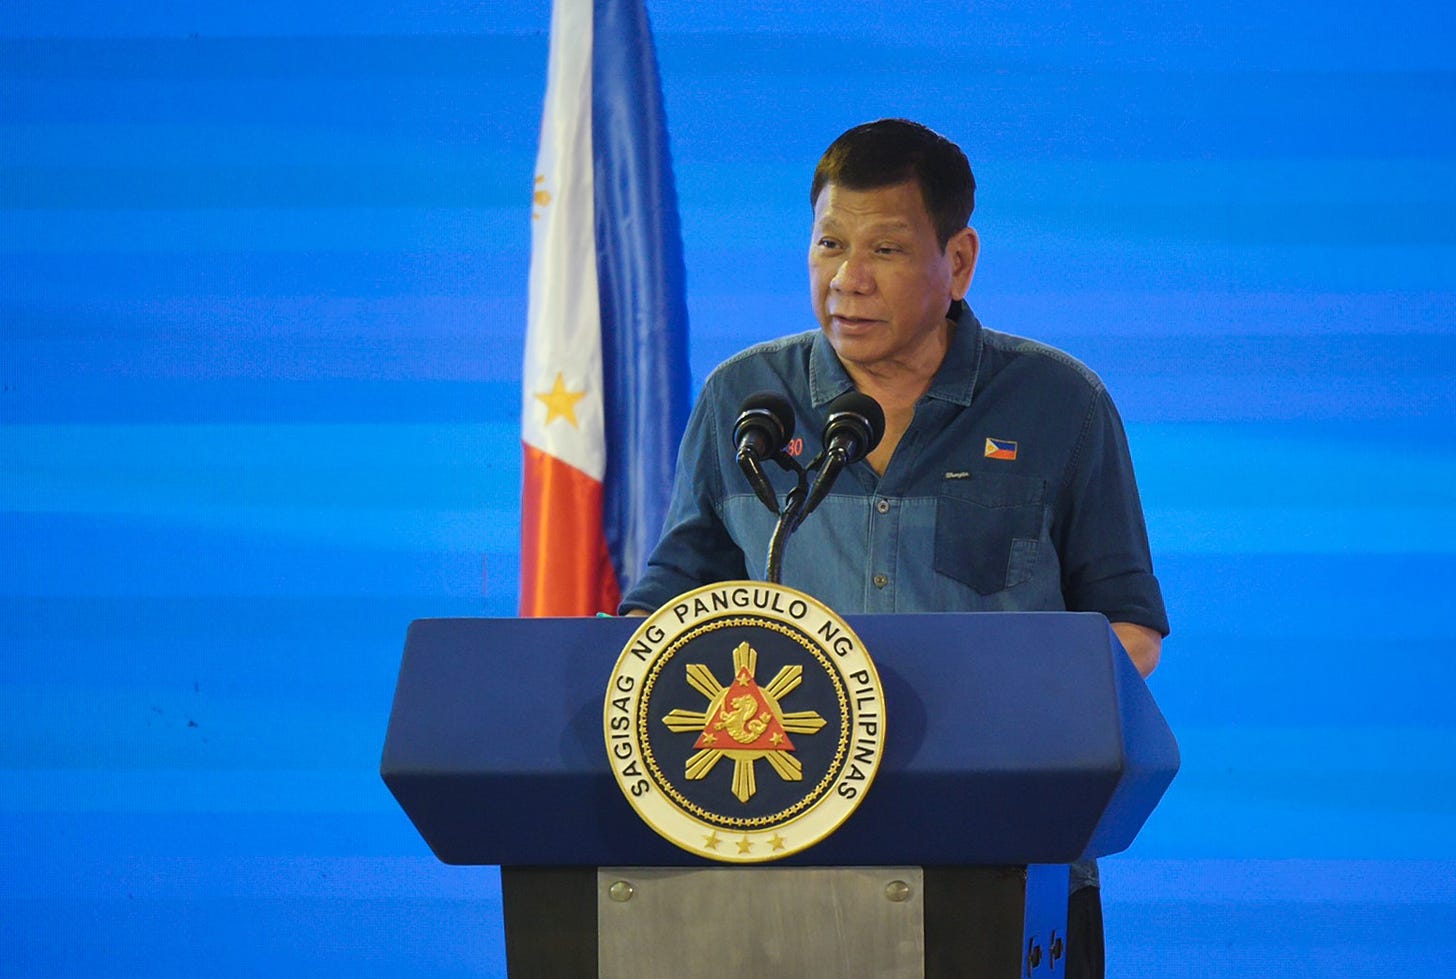 Philippines President Rodrigo Duterte (Image: Presidential Communications Operations Office/@pcoogov)